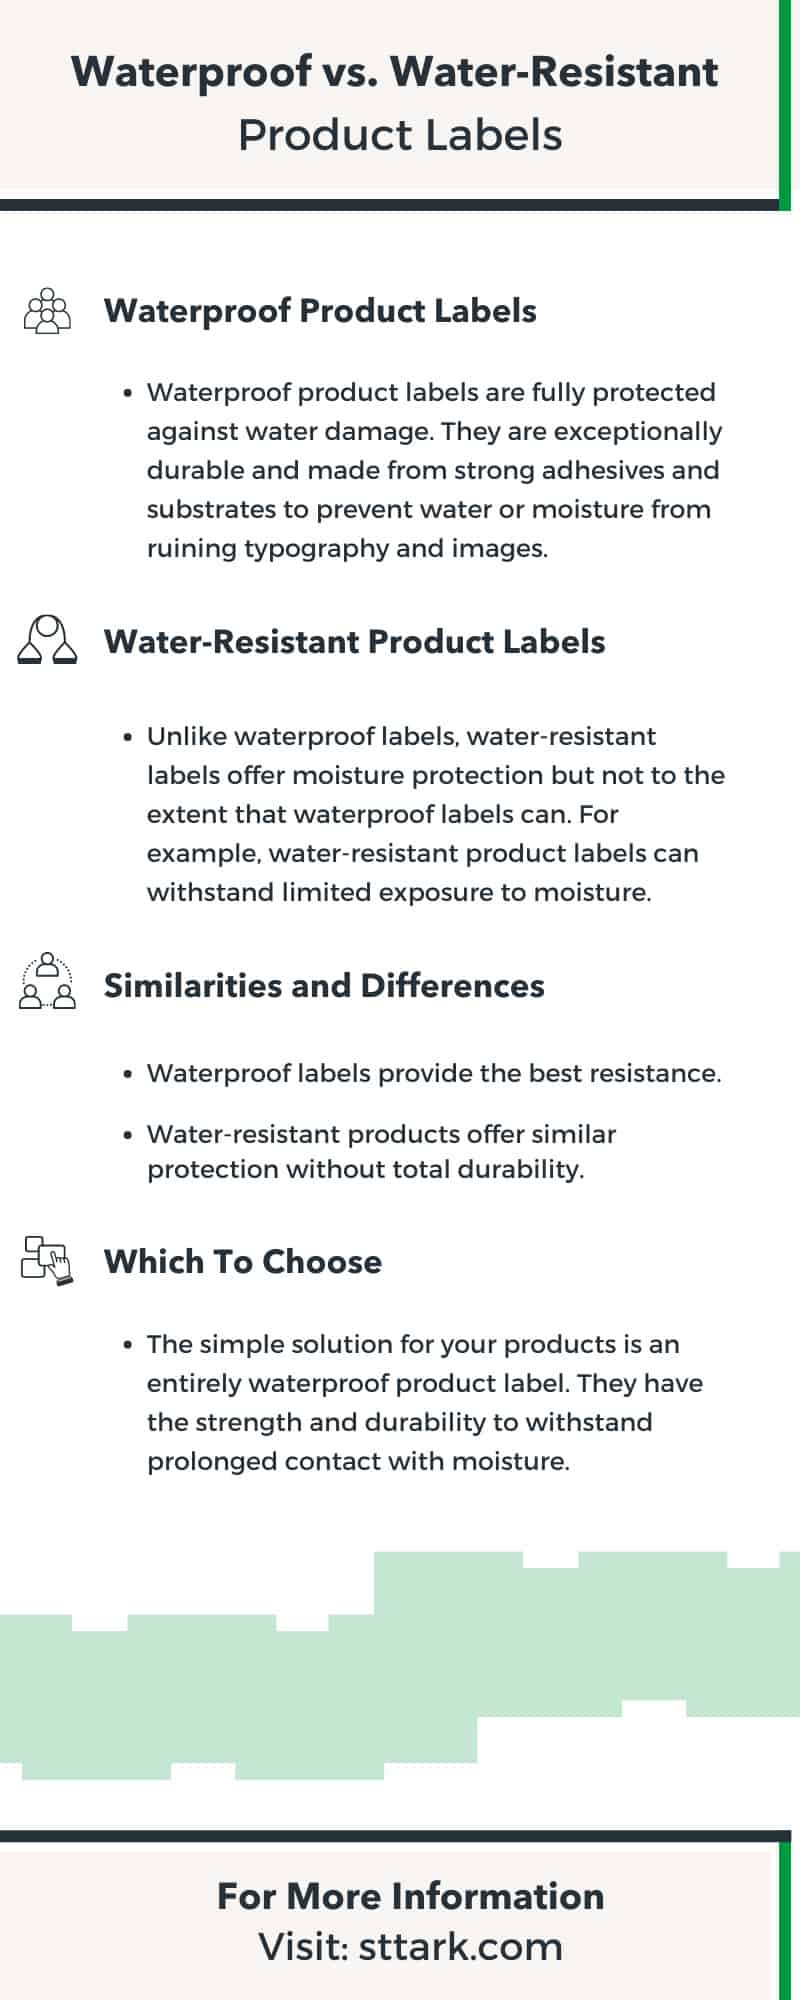 Waterproof vs. Water-Resistant Product Labels